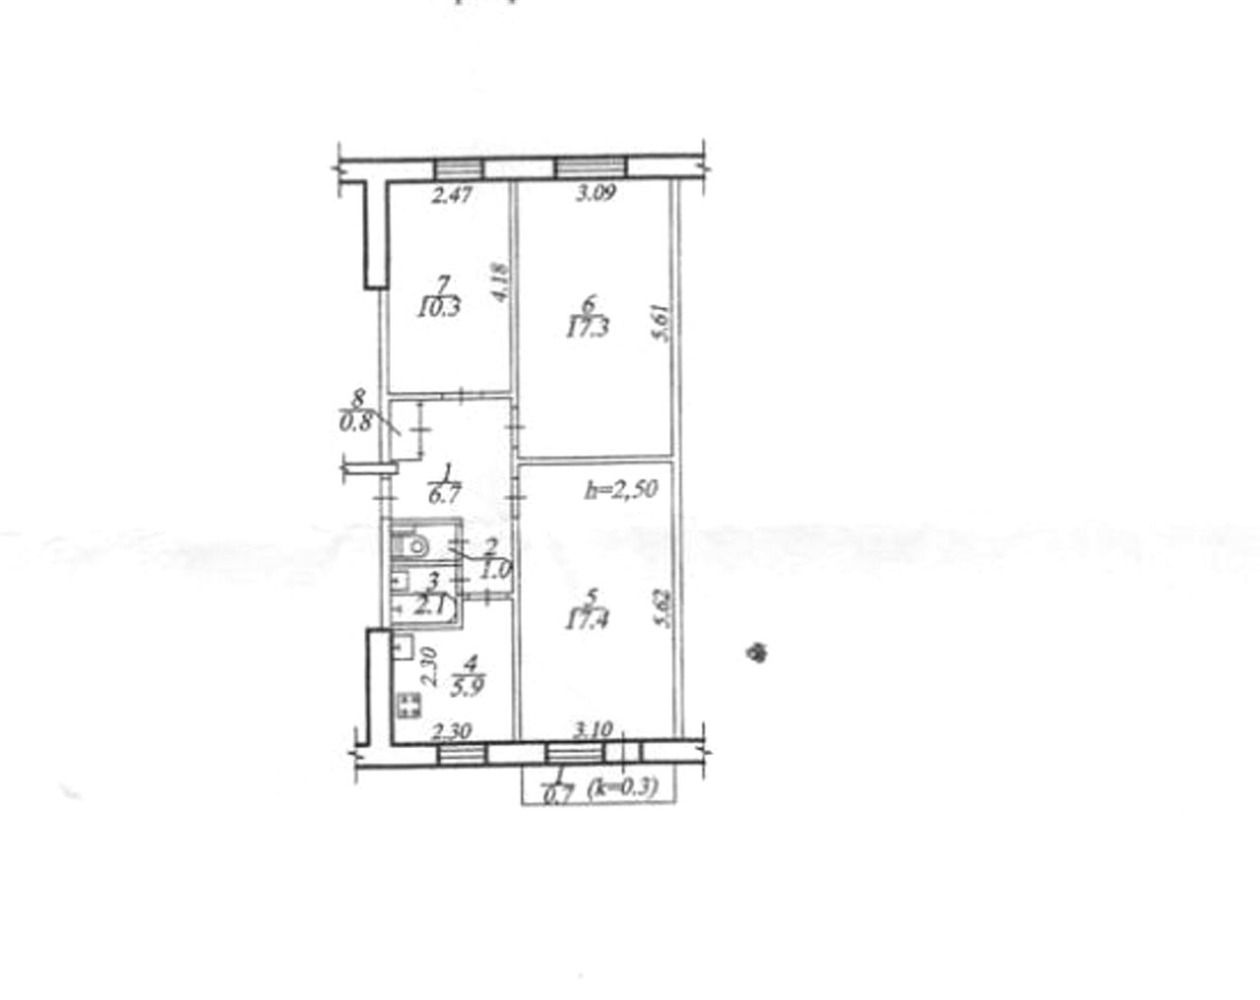 Планировка квартиры 3 комнатной брежневки